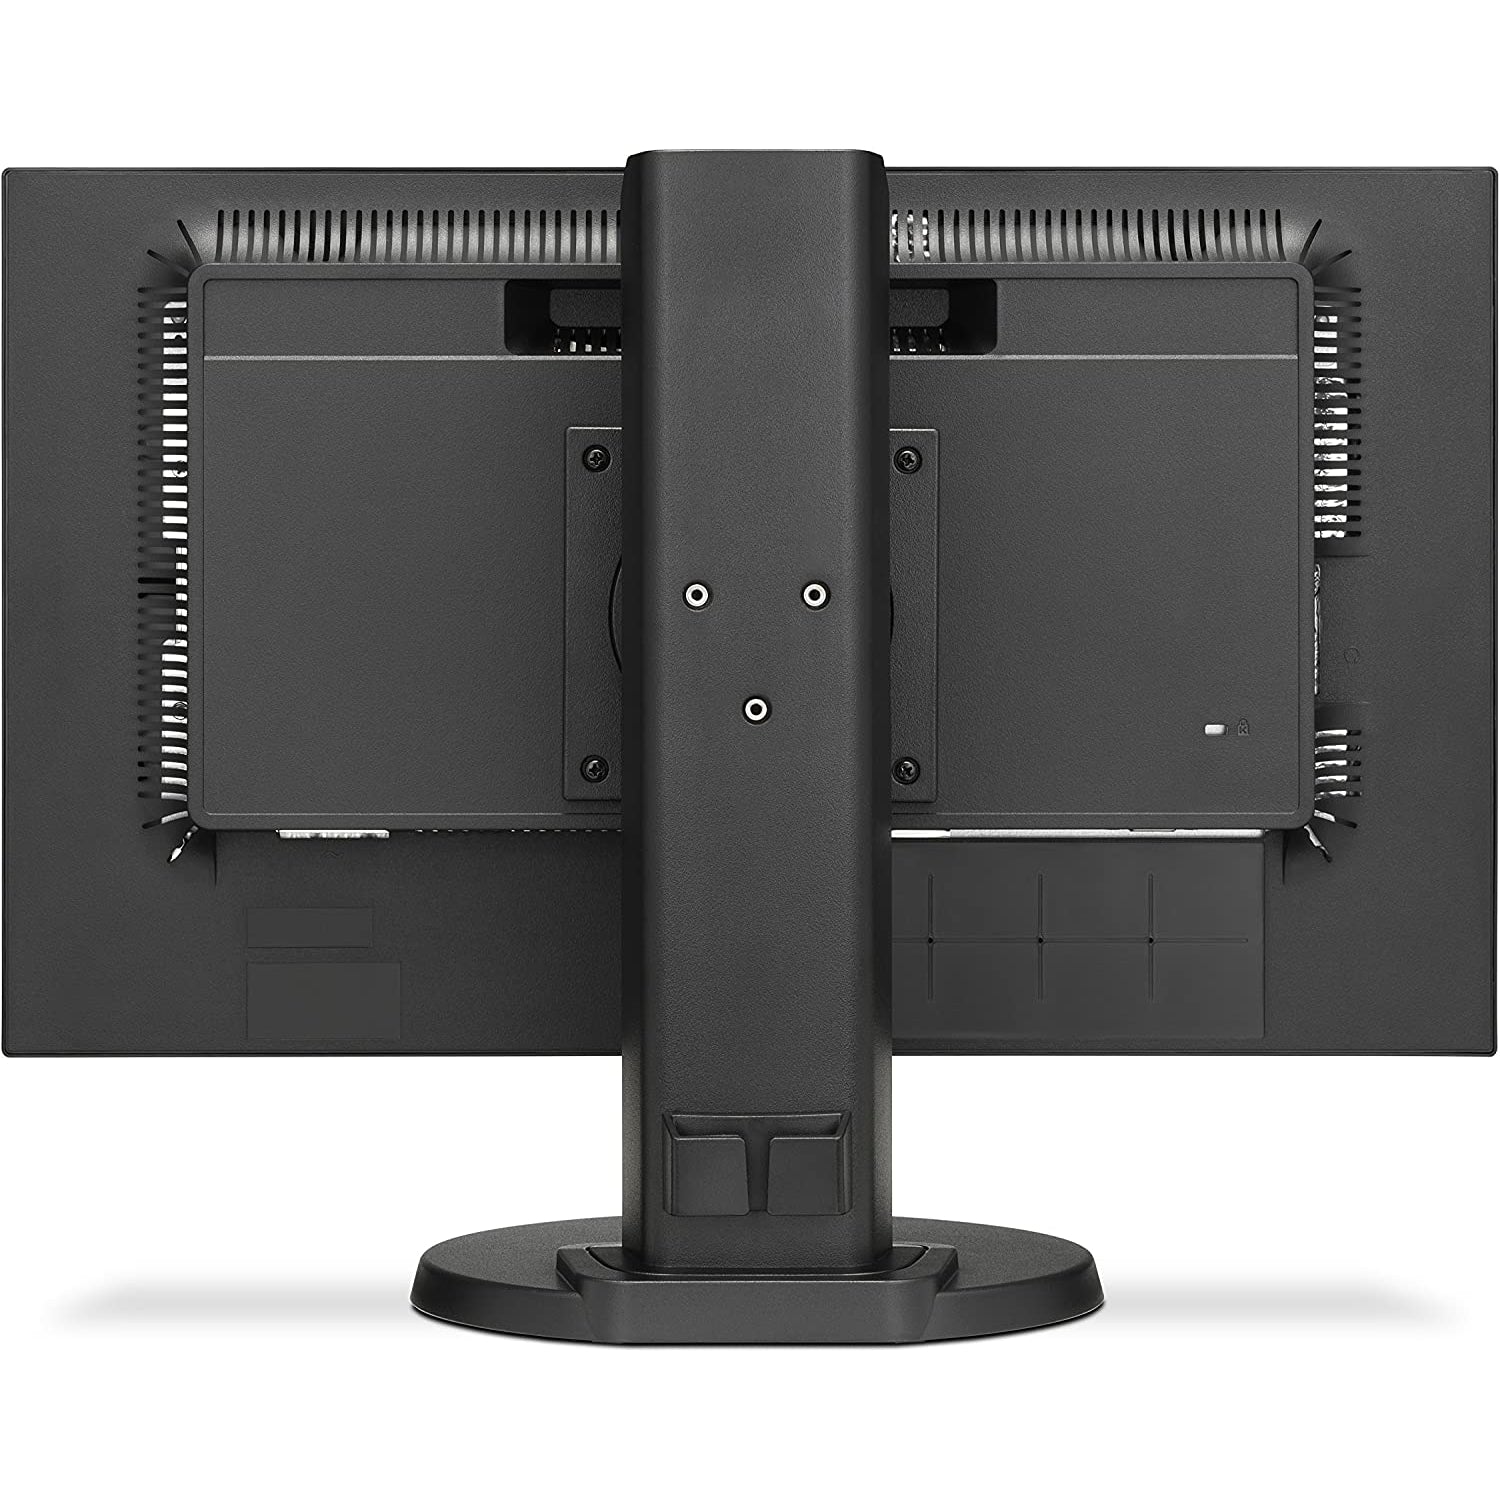 NEC 1PE221N 22-Inch LCD Multi Sync Commercial Display Monitor - Black